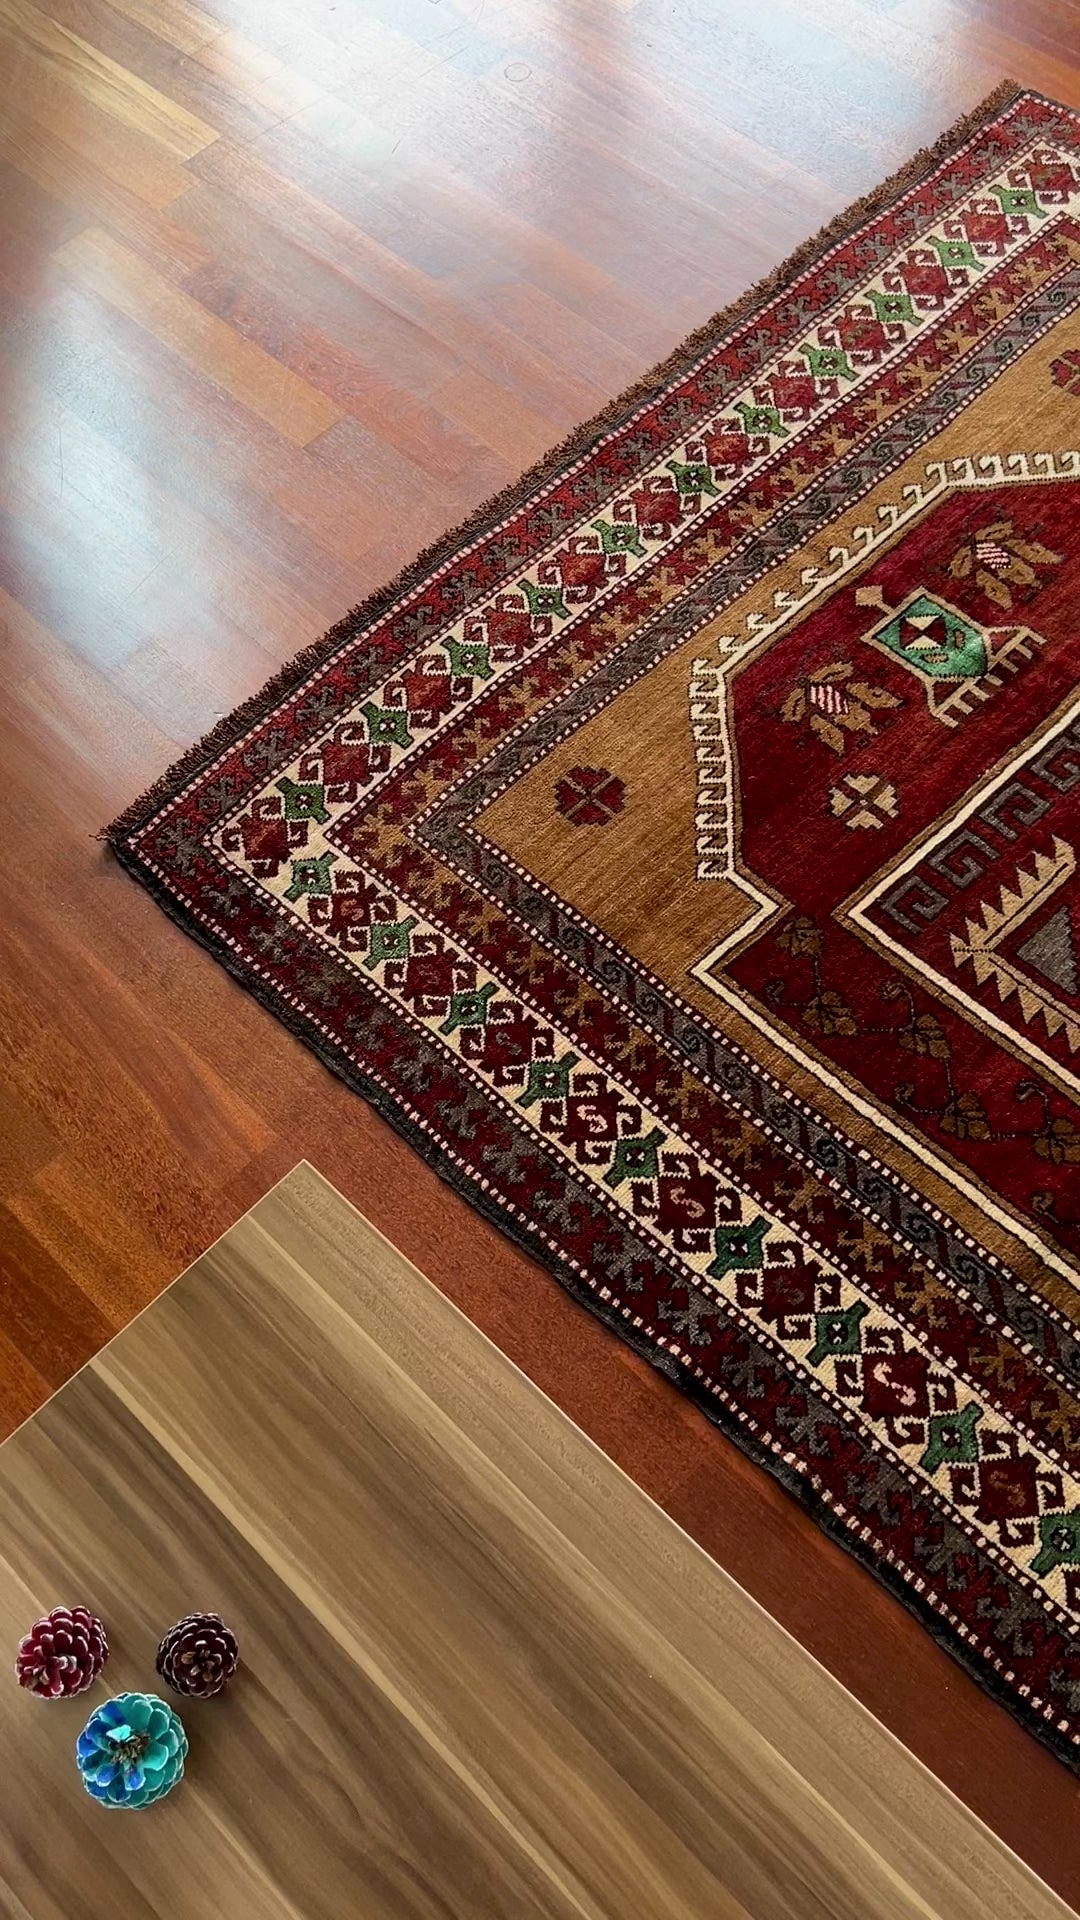 kars anatolian rug turkish rug san francisco bay area oriental rug shop palo alto rug shopping berkeley buy rugs online california ca toronto canada